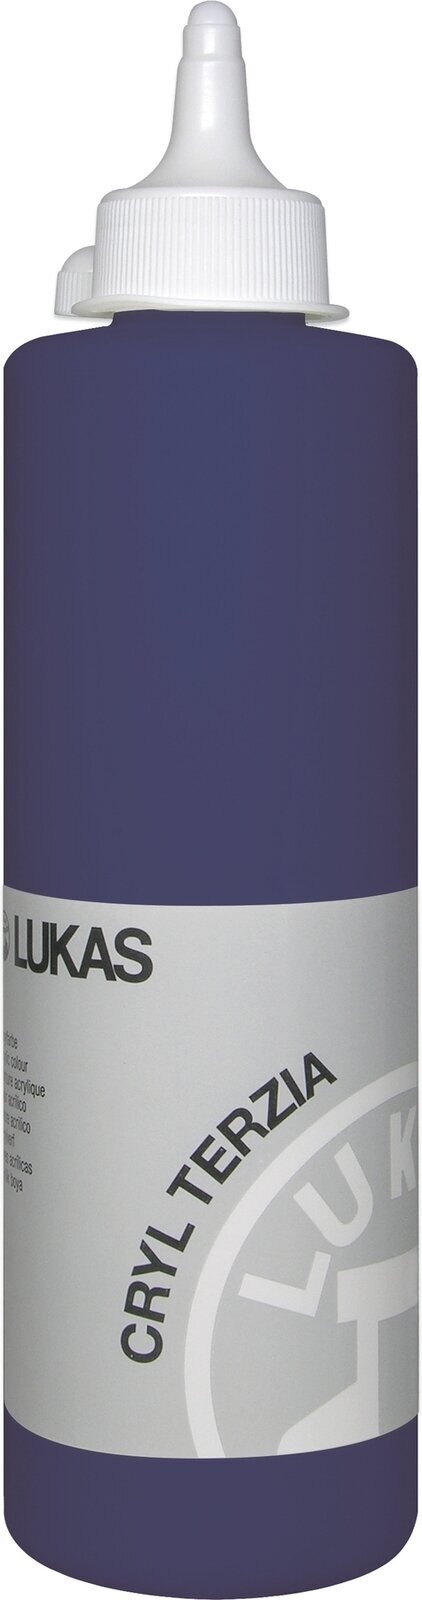 Akrylová farba Lukas Cryl Terzia Acrylic Paint Plastic Bottle Akrylová farba Prussian Blue 500 ml 1 ks